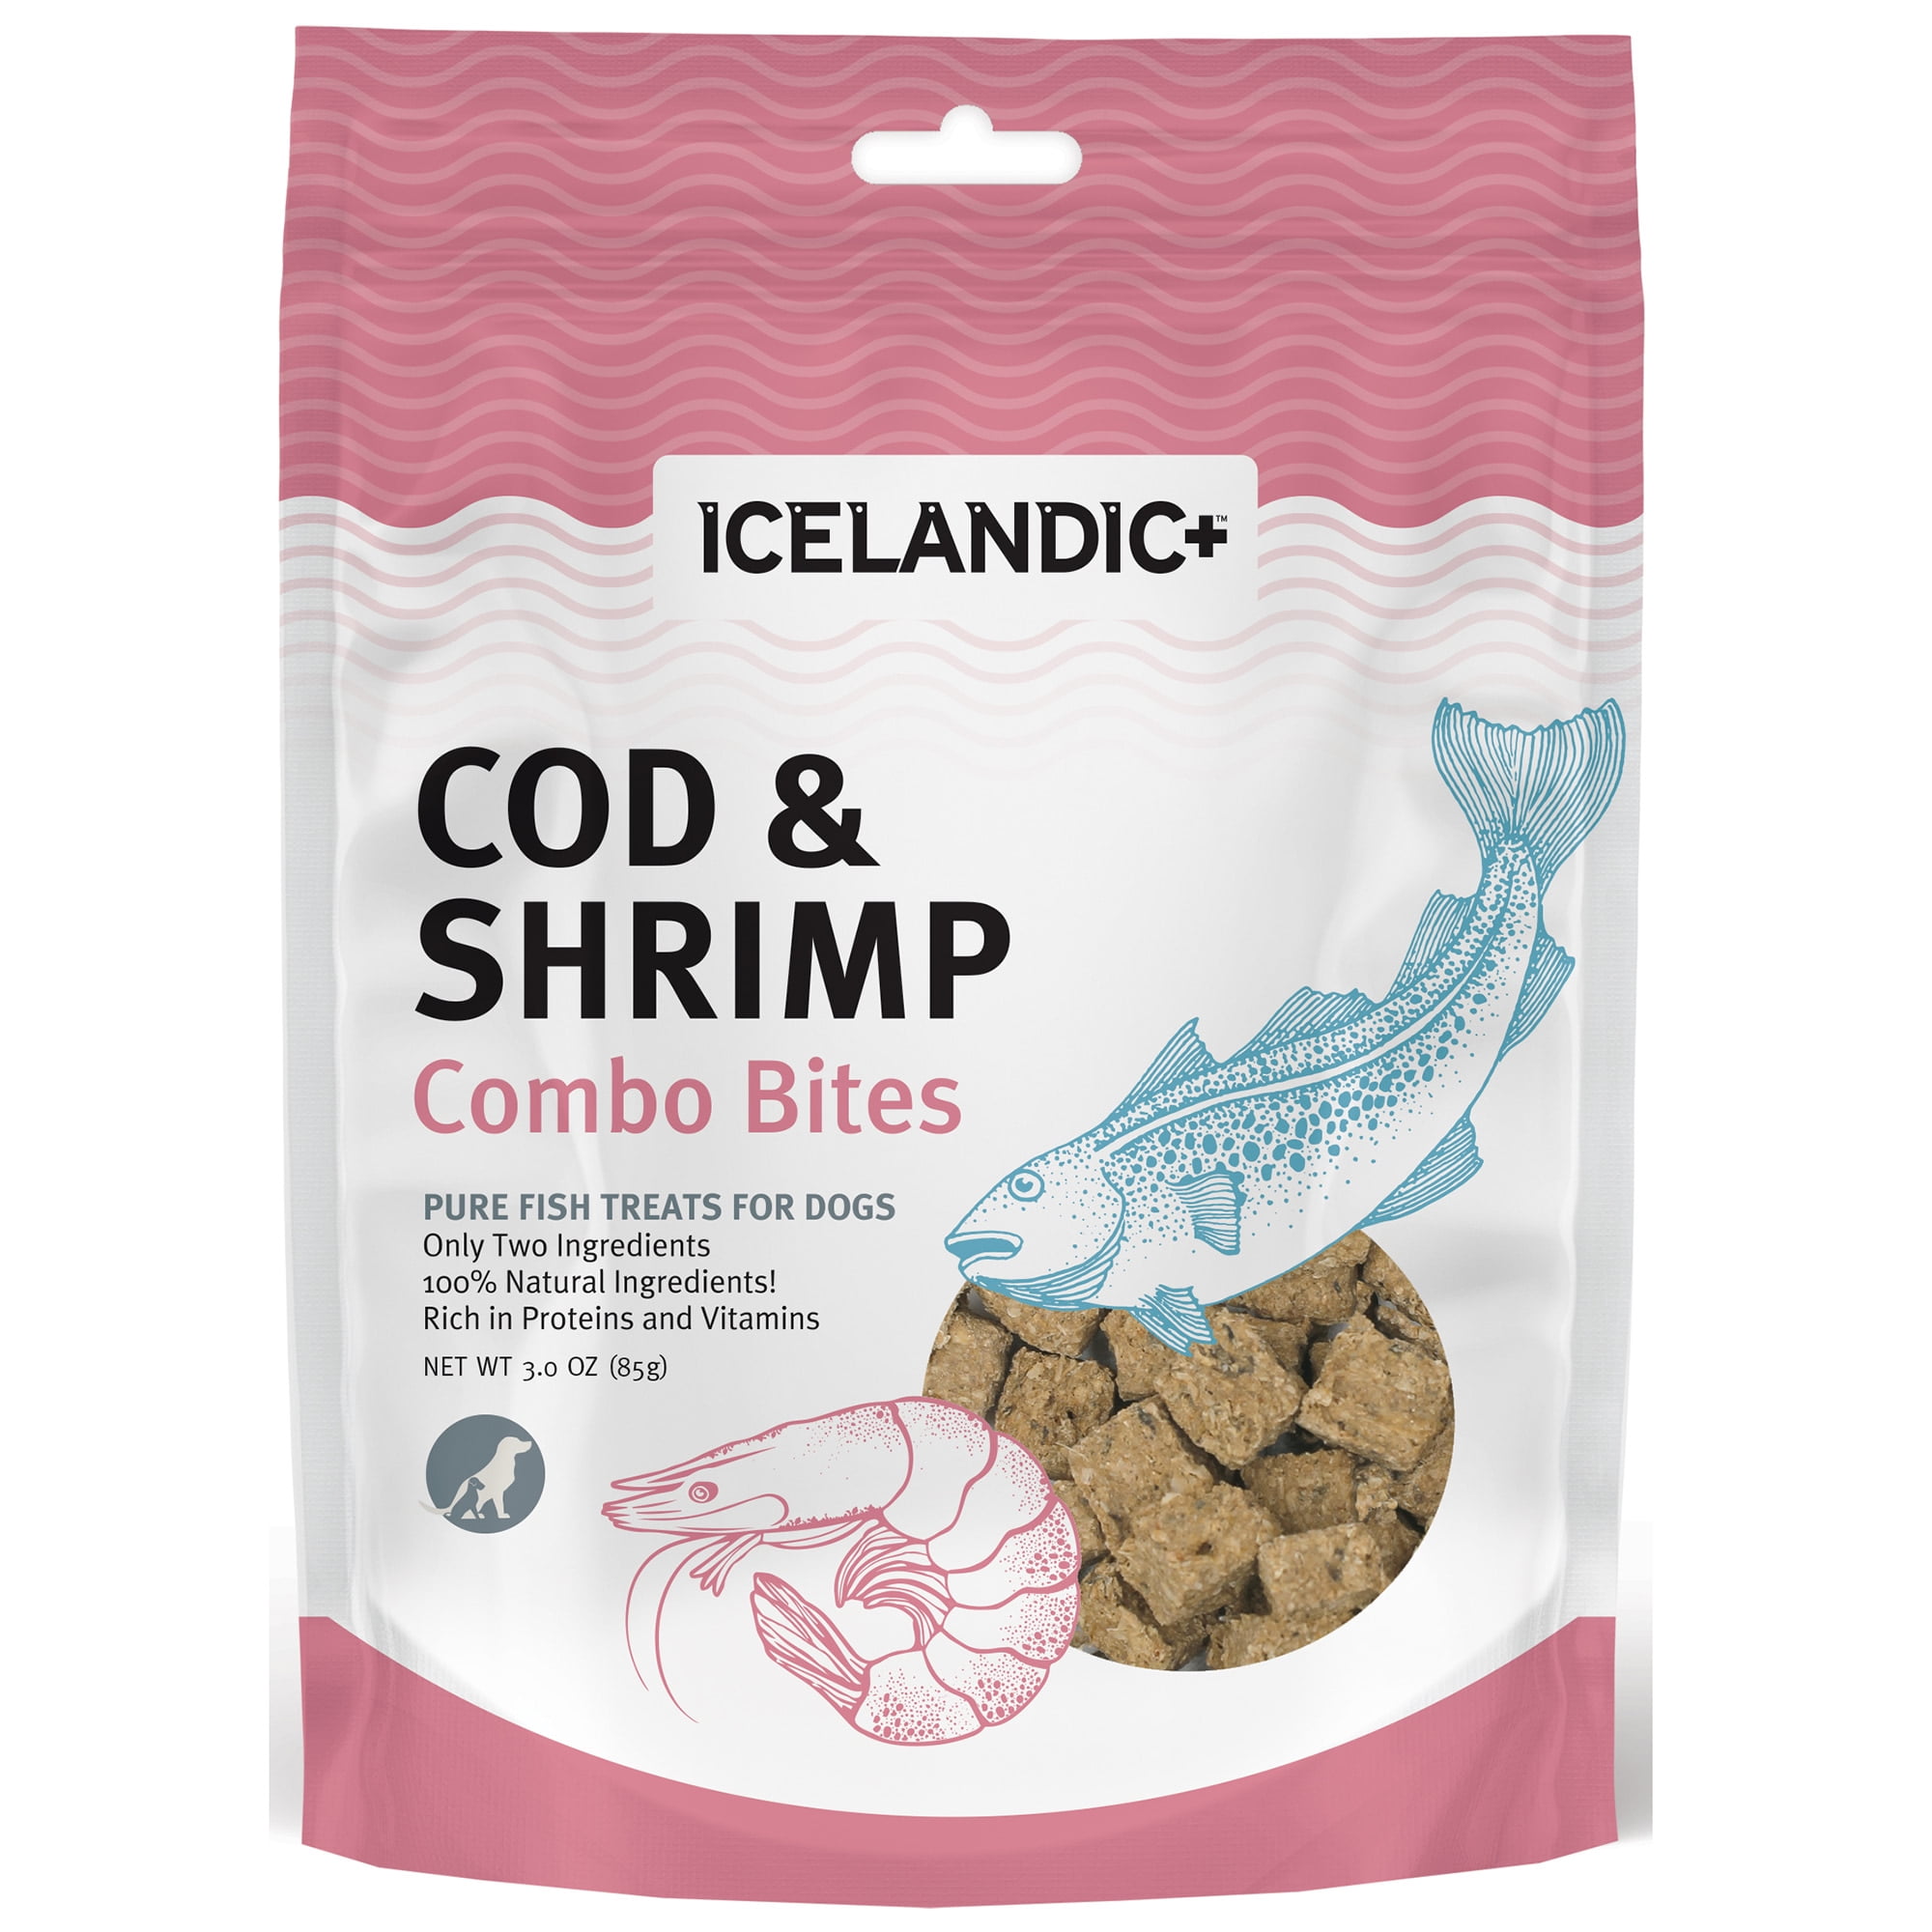 Ih82919 3.52 Oz Cod & Shrimp Combo Bites Fish Dog Treat Bag